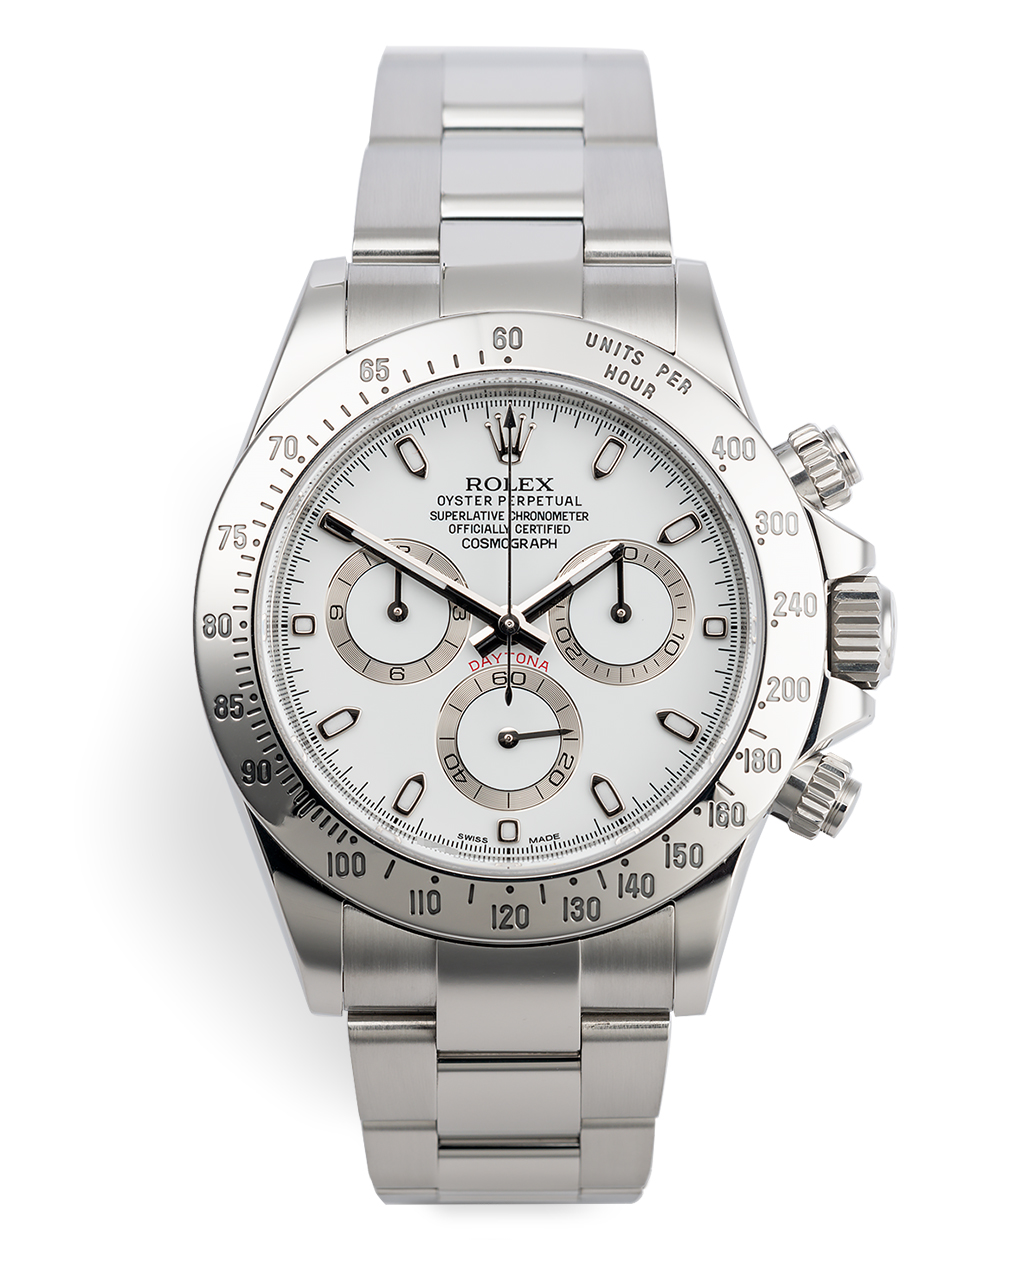 Rolex Cosmograph Daytona Watches | ref 116520 | 'Chromalight' Complete ...